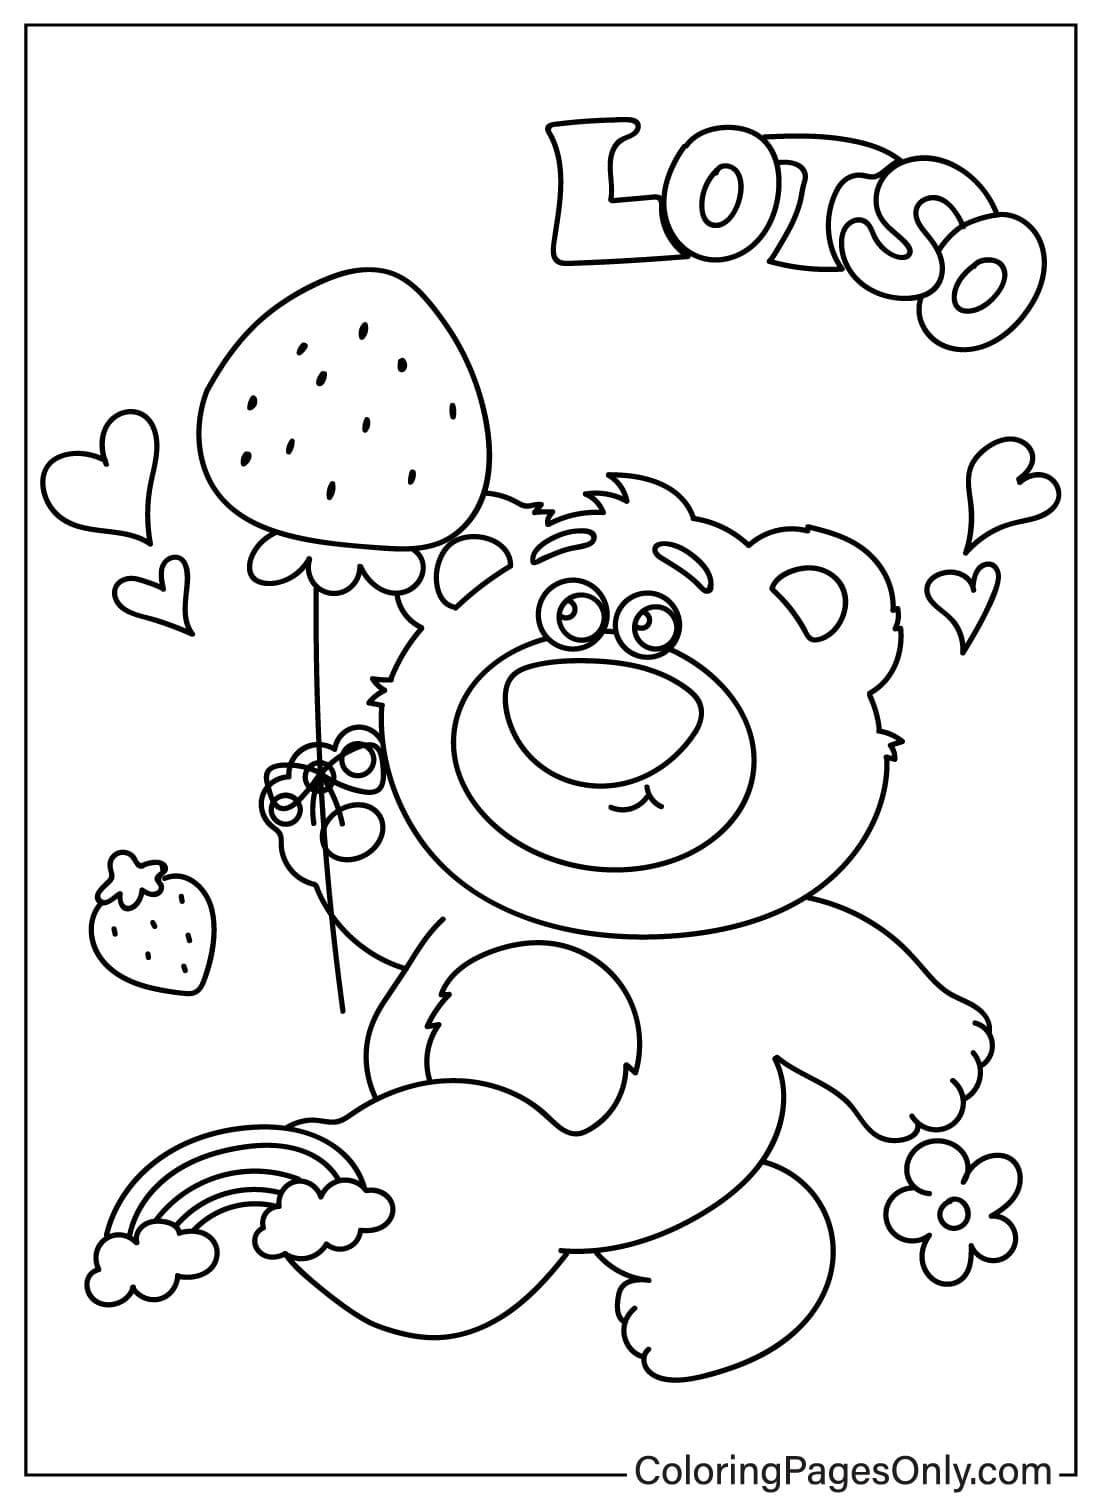 Afdrukbare Lotso Bear kleurplaat van Lotso Bear